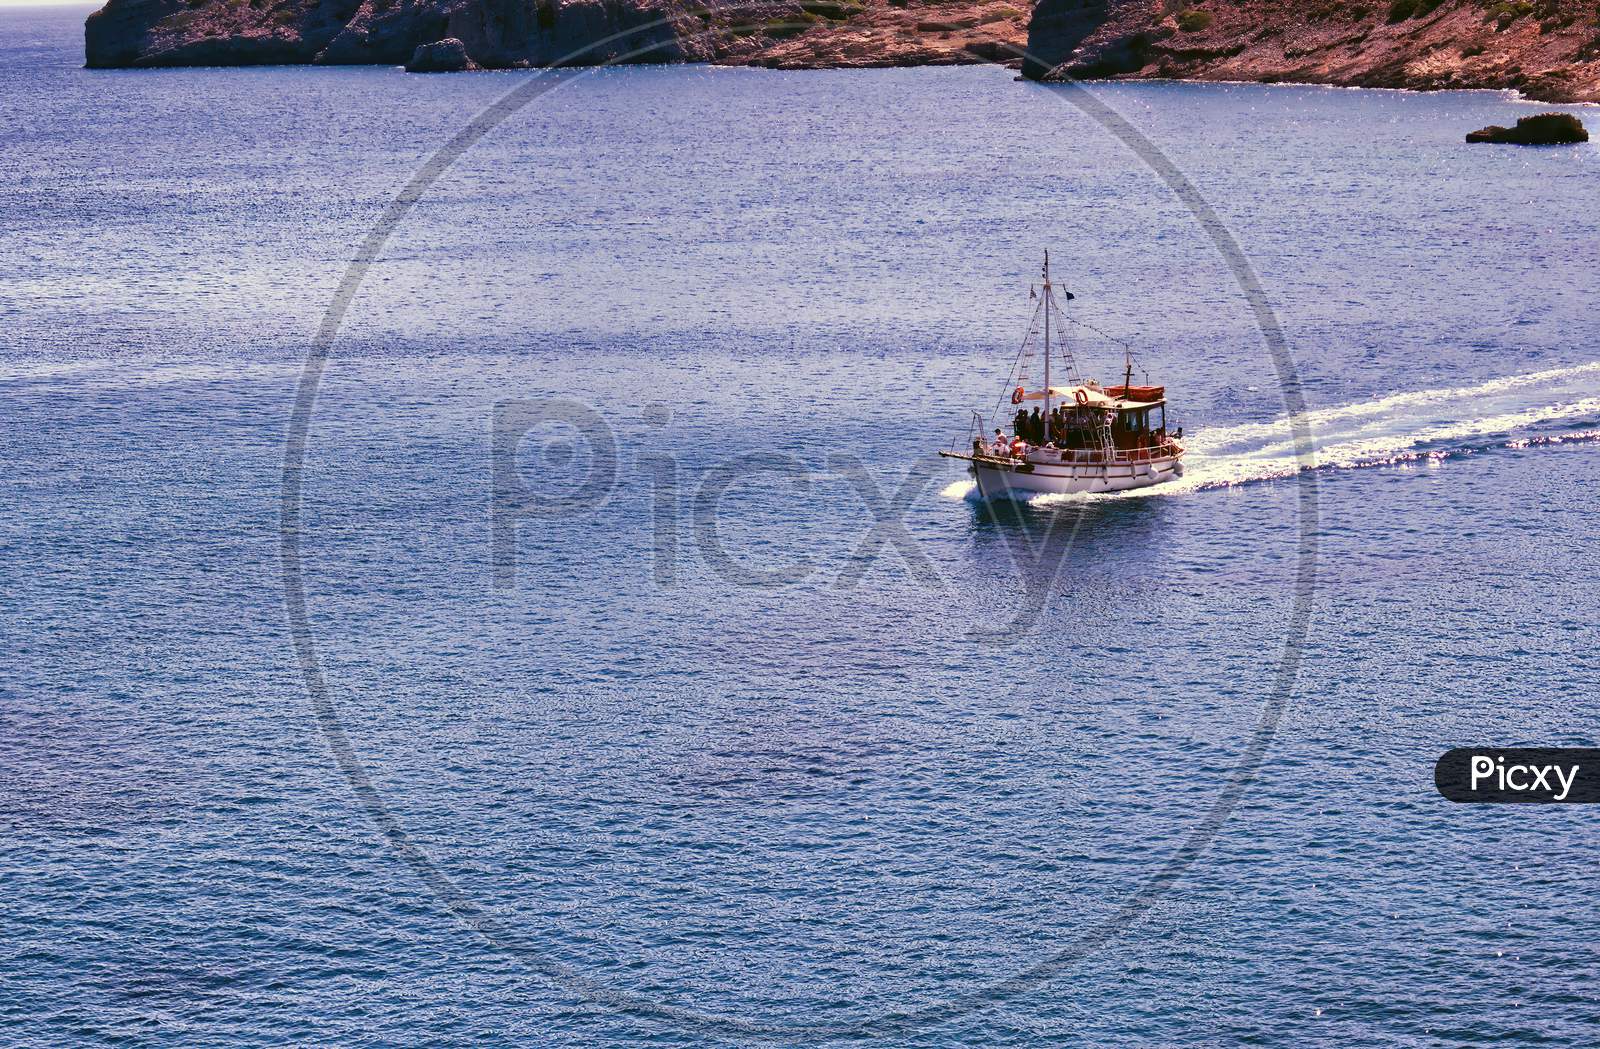 Crete Or Kreta, Greece: A Ship Sailing On Mediterranean Sea Against Rocky Terrain On Spinalonga Island, Formerly Used As A Leper Colony, Near Elounda, Mirabello Gulf